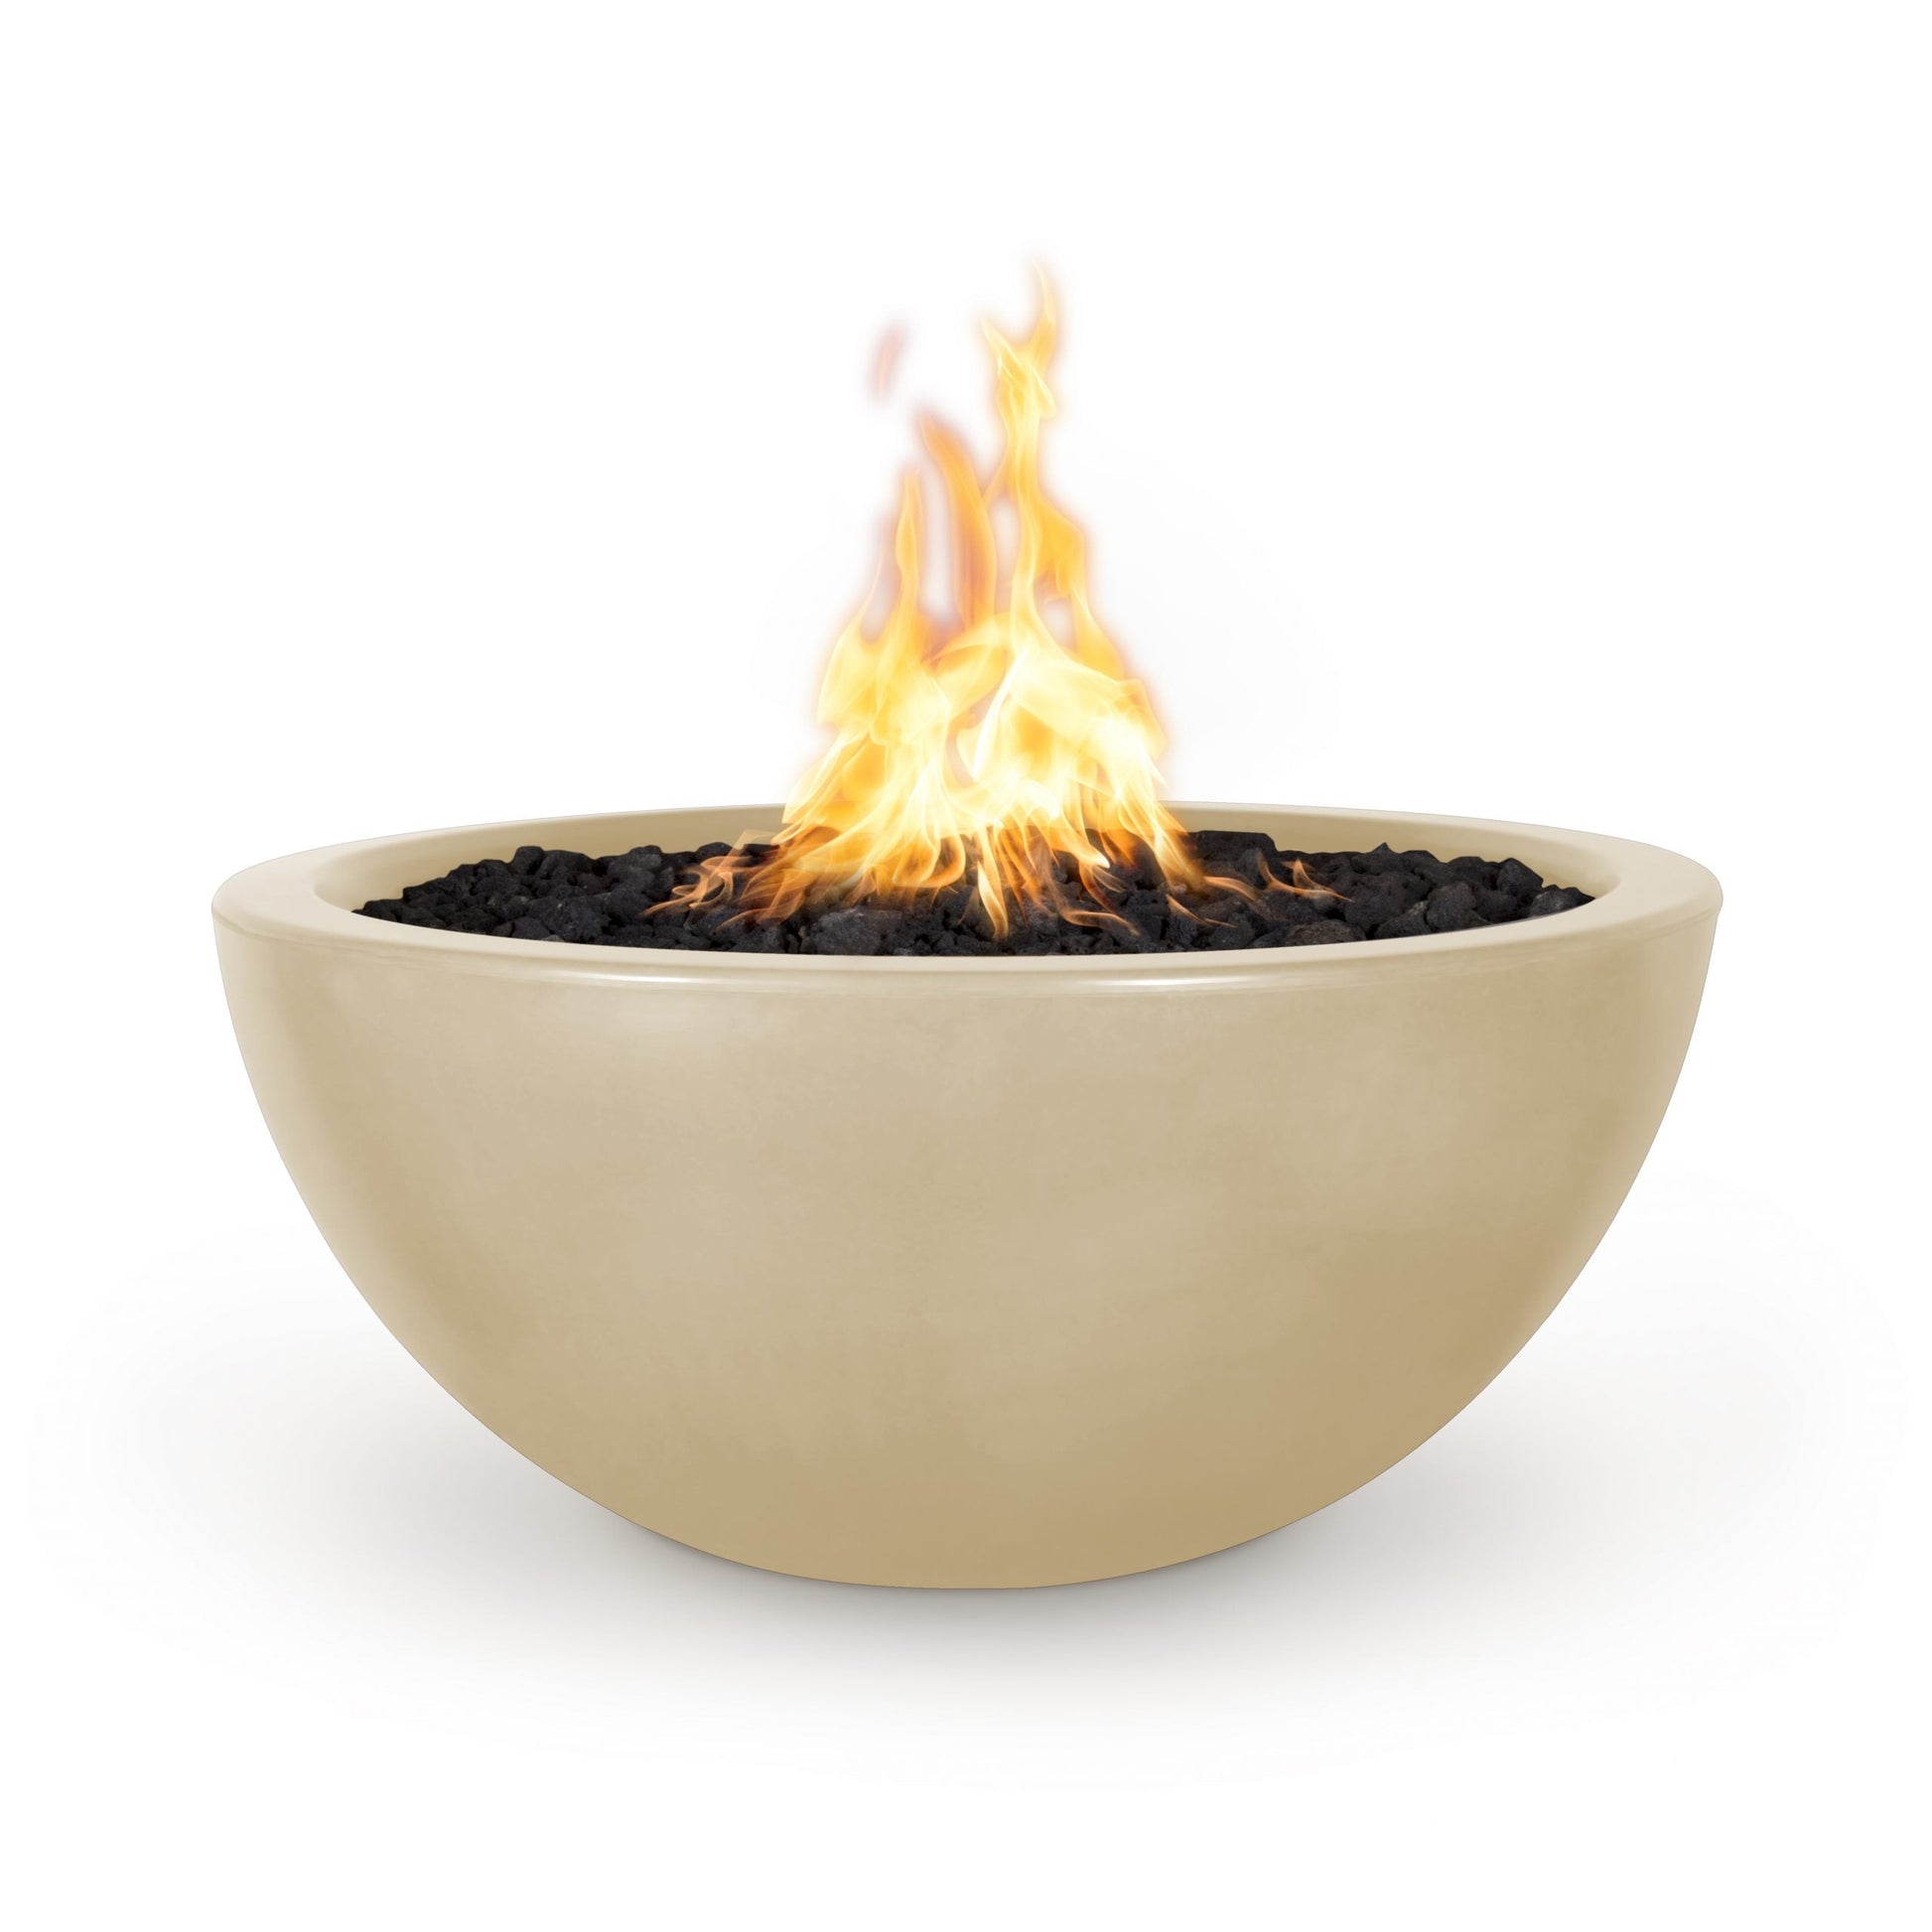 The Outdoor Plus Round Luna 38" Chestnut GFRC Concrete Liquid Propane Fire Bowl with Match Lit with Flame Sense Ignition